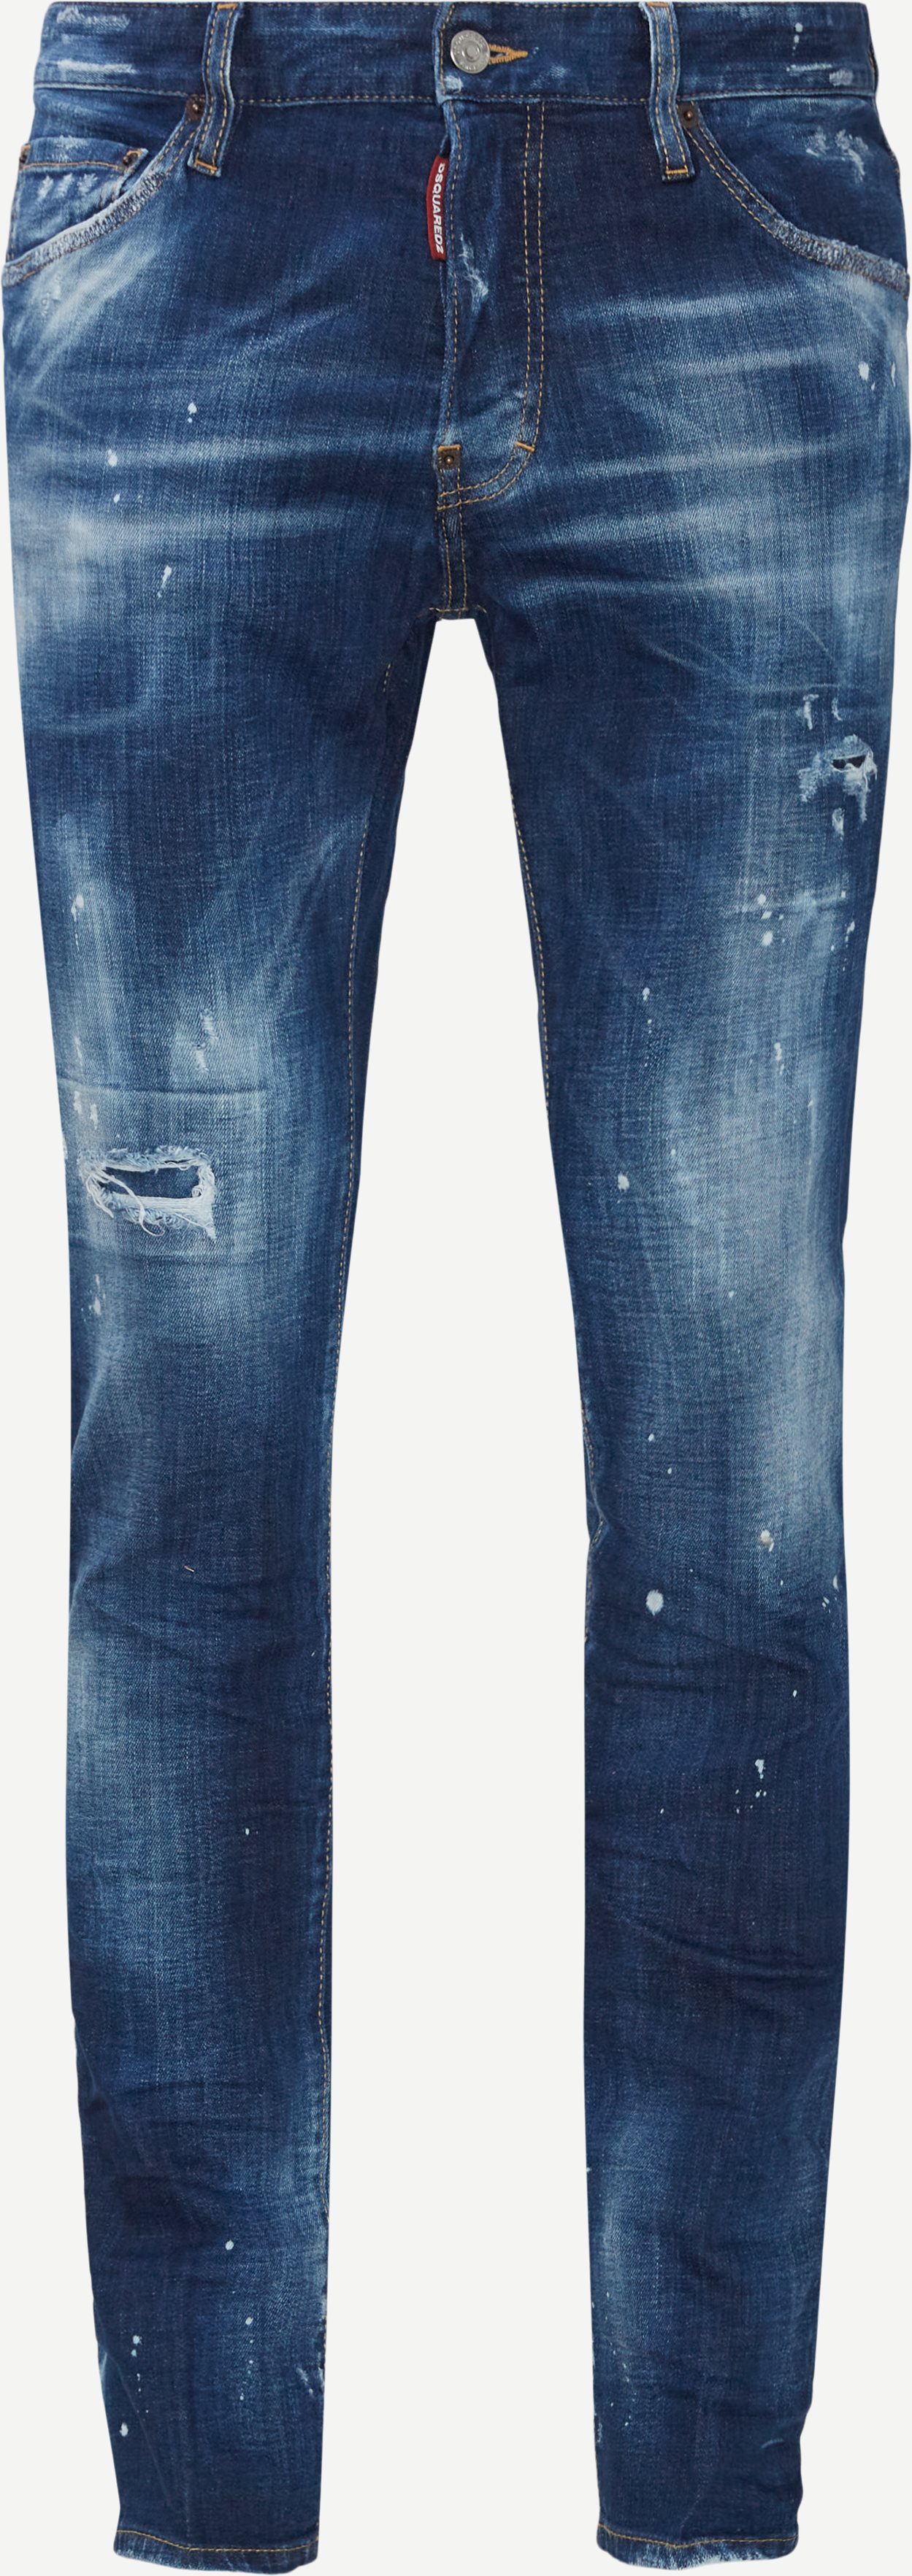 Icon Spray Cool Guy Jeans - Jeans - Skinny fit - Denim